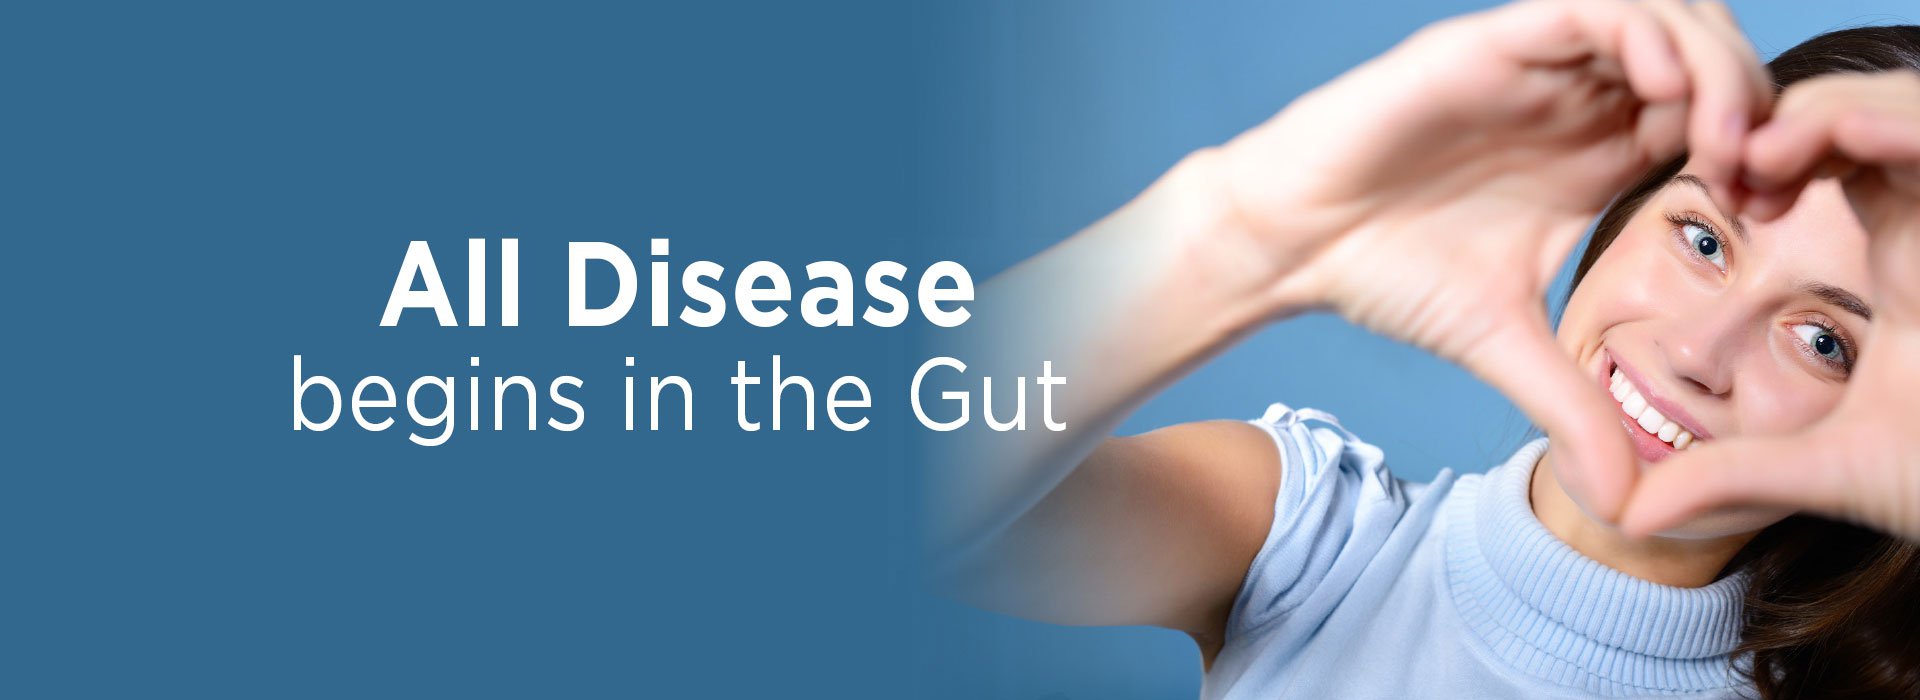 New Image International:Gut Health